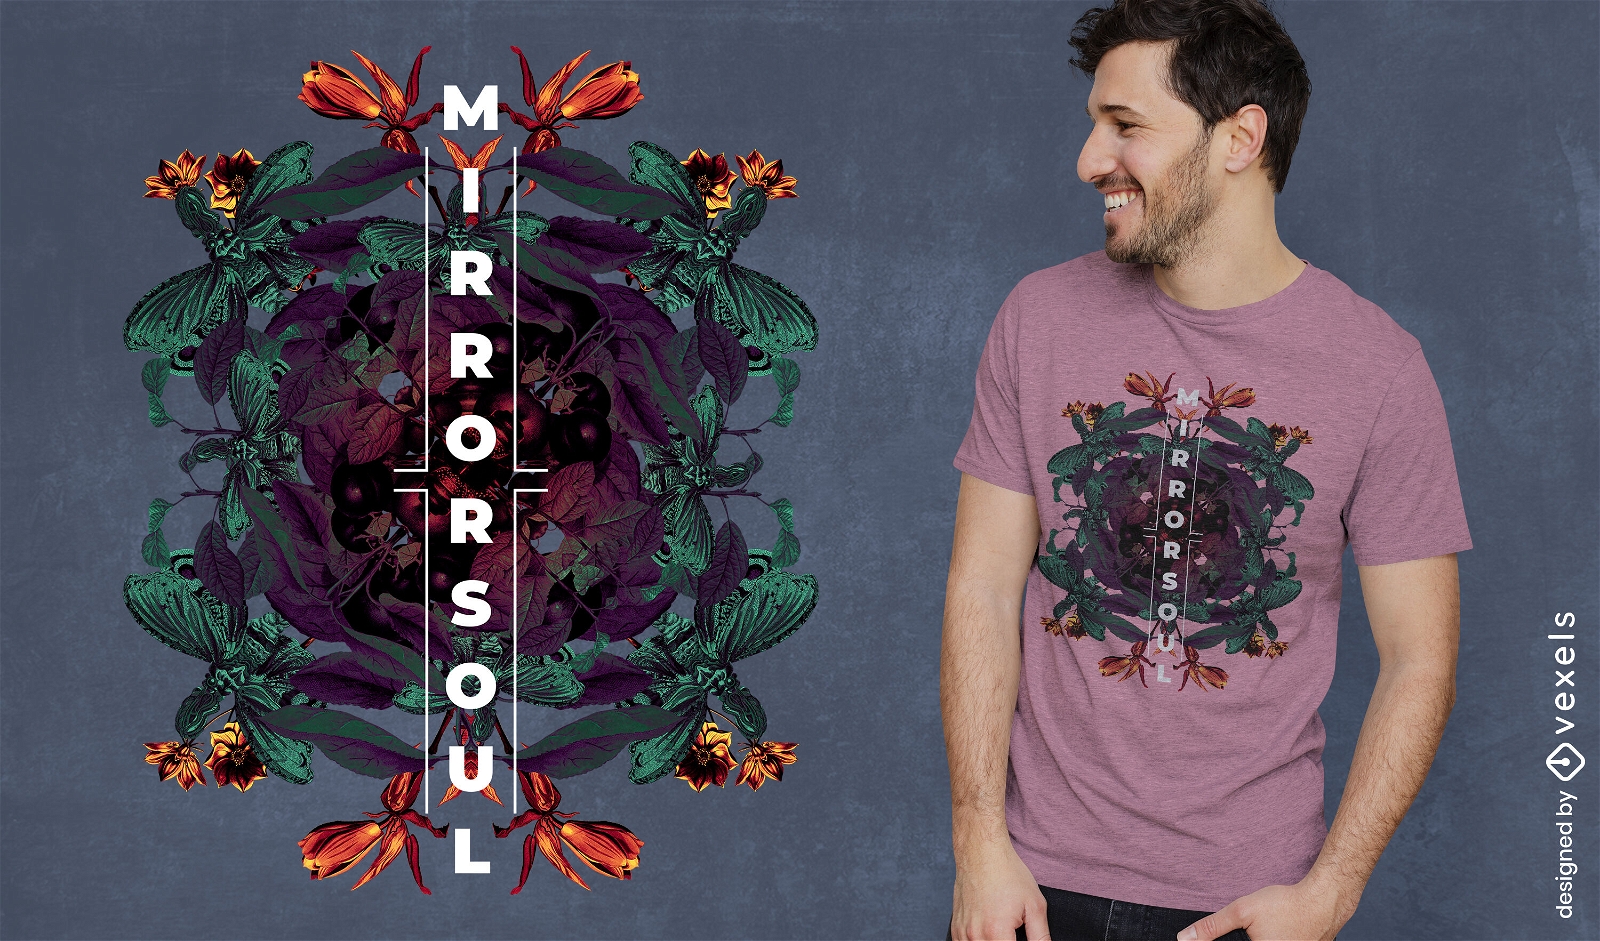 Mirrored kaleidoscope t-shirt design